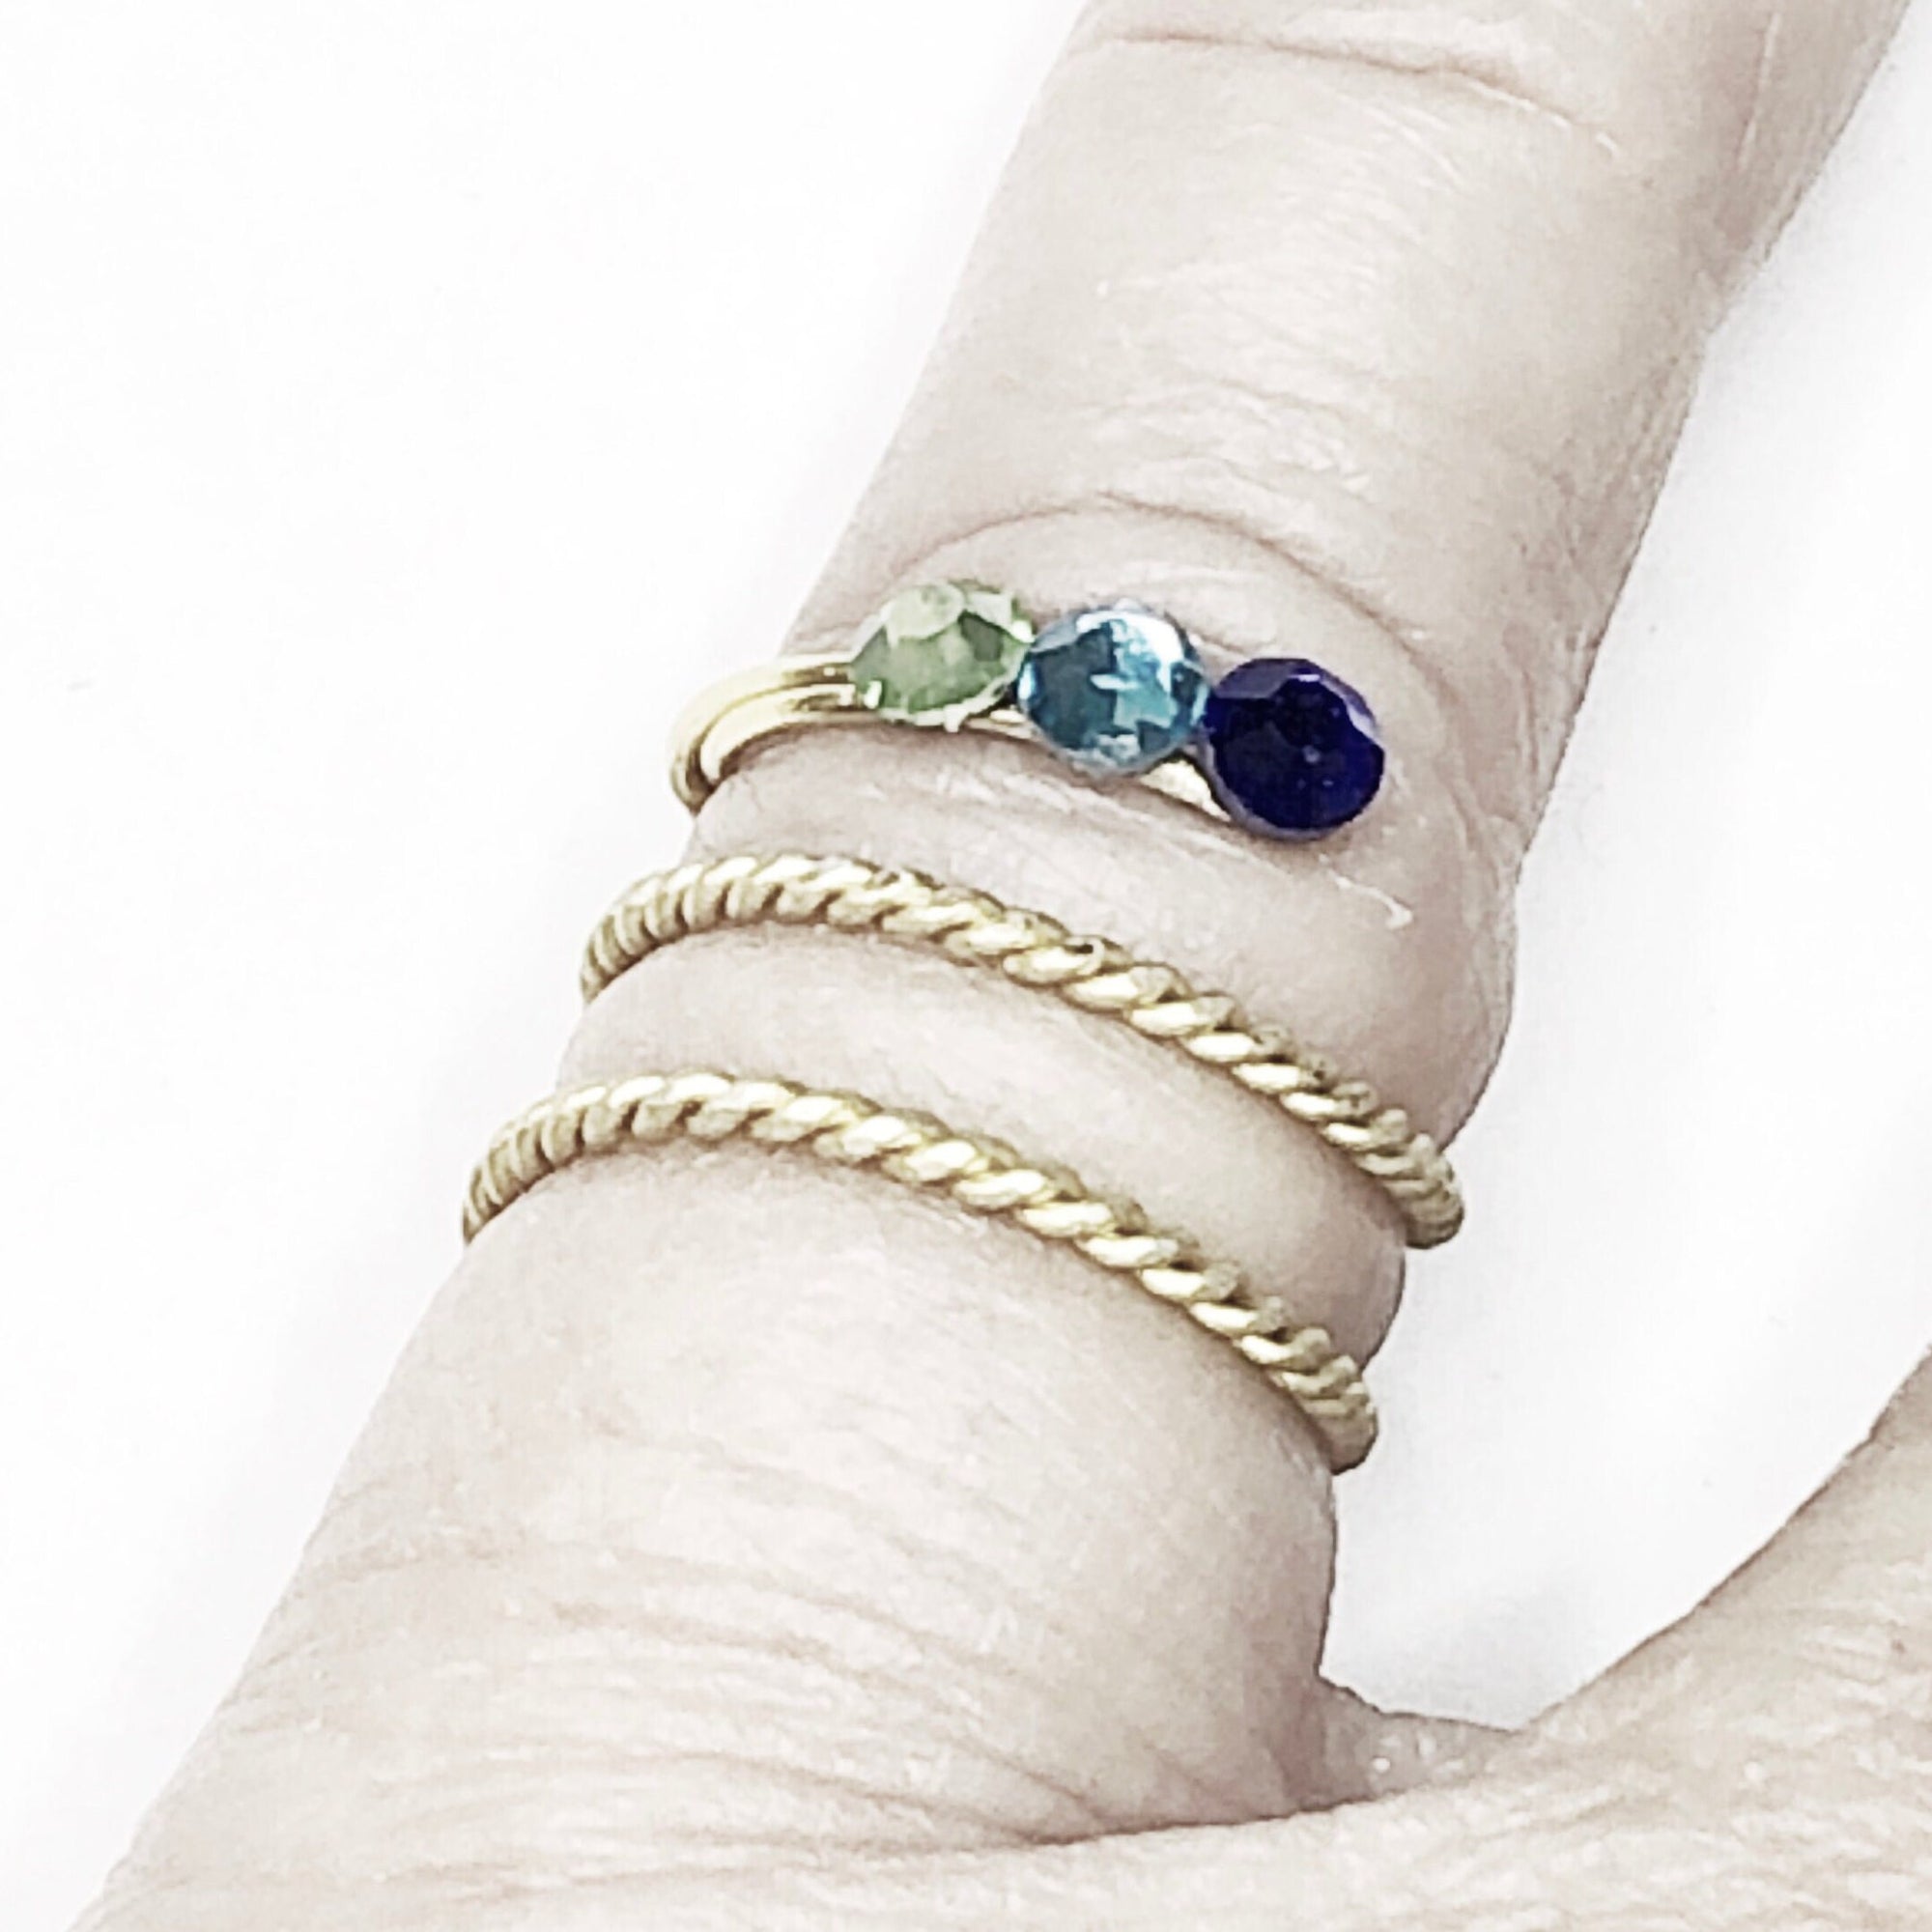 Handmade Sterling Silver birthstone ring, Beautiful keepsake ring set, Adjustable birthstone ring for mom, Colorful December birthstone ring